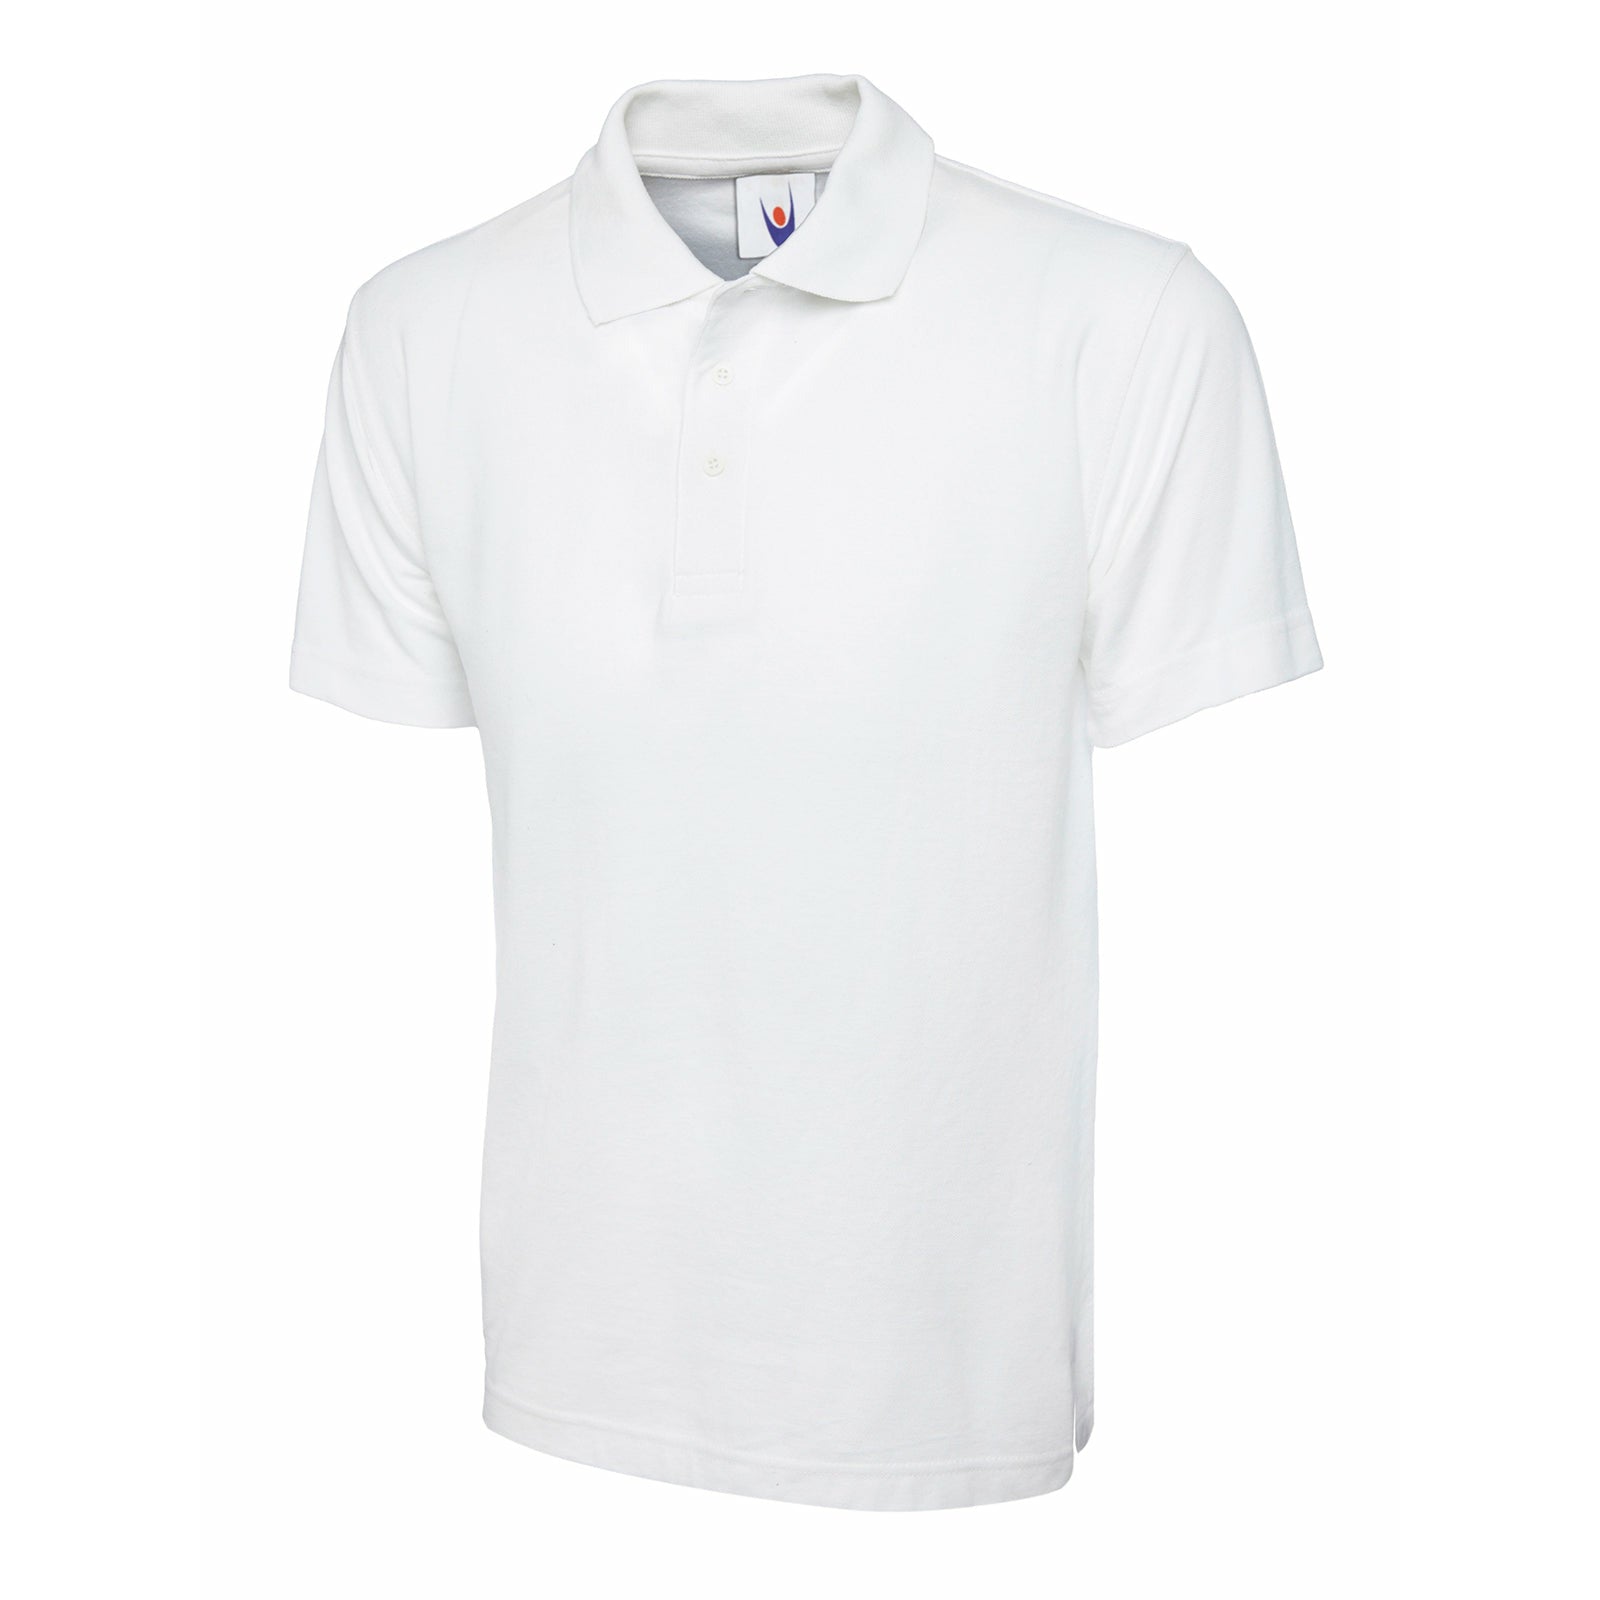 Childrens Classic Polo Shirt White